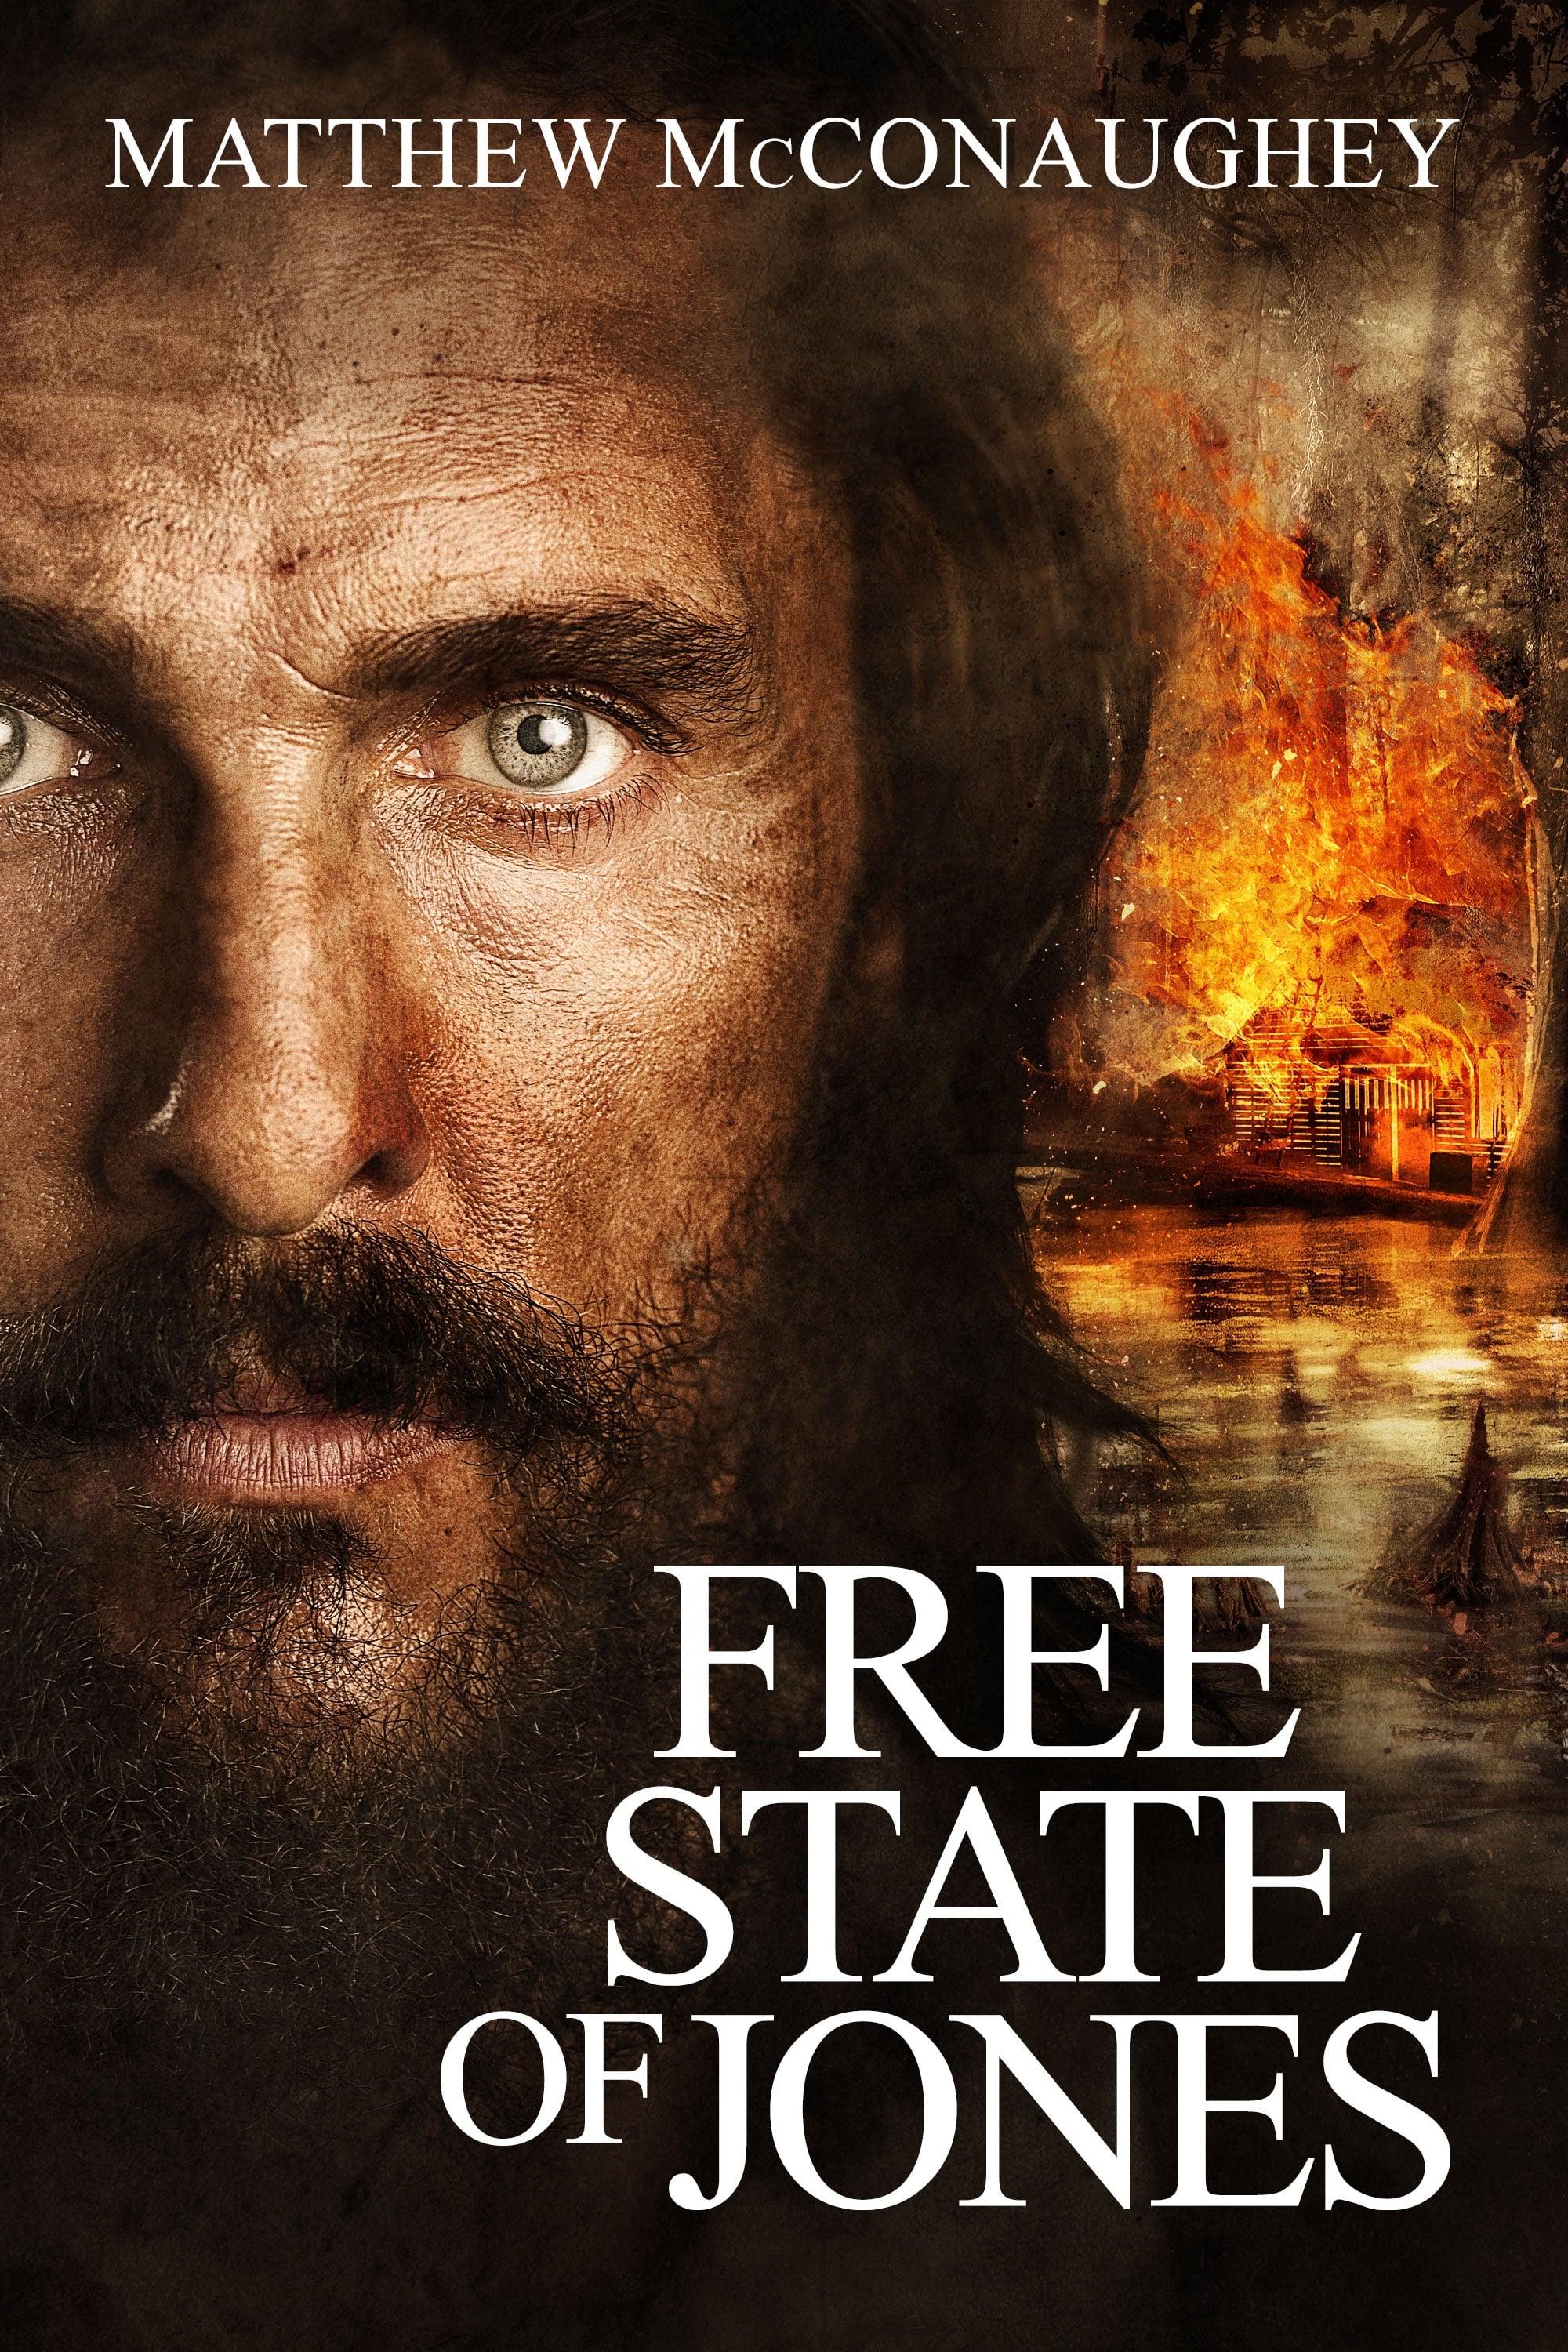 Free State of Jones poster